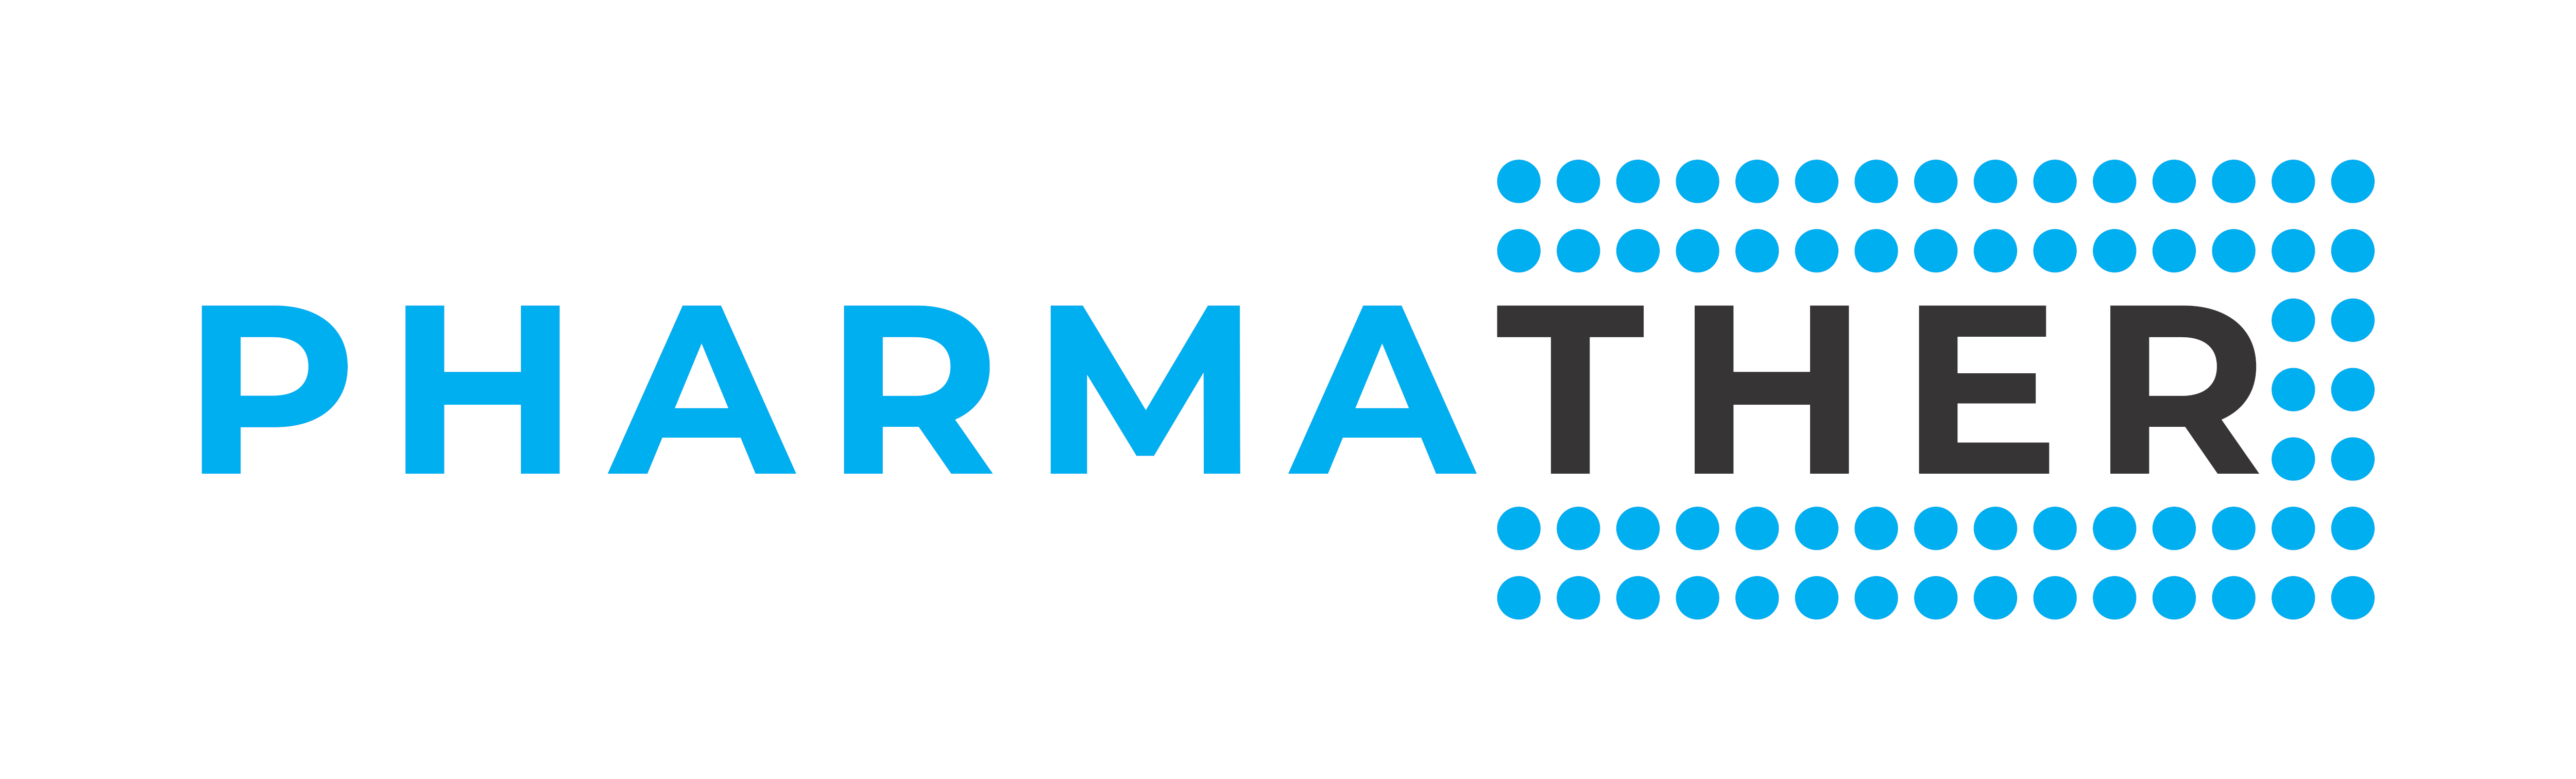 PHRM-Logo-PHARMATHER 1-Mar2-2021.jpg